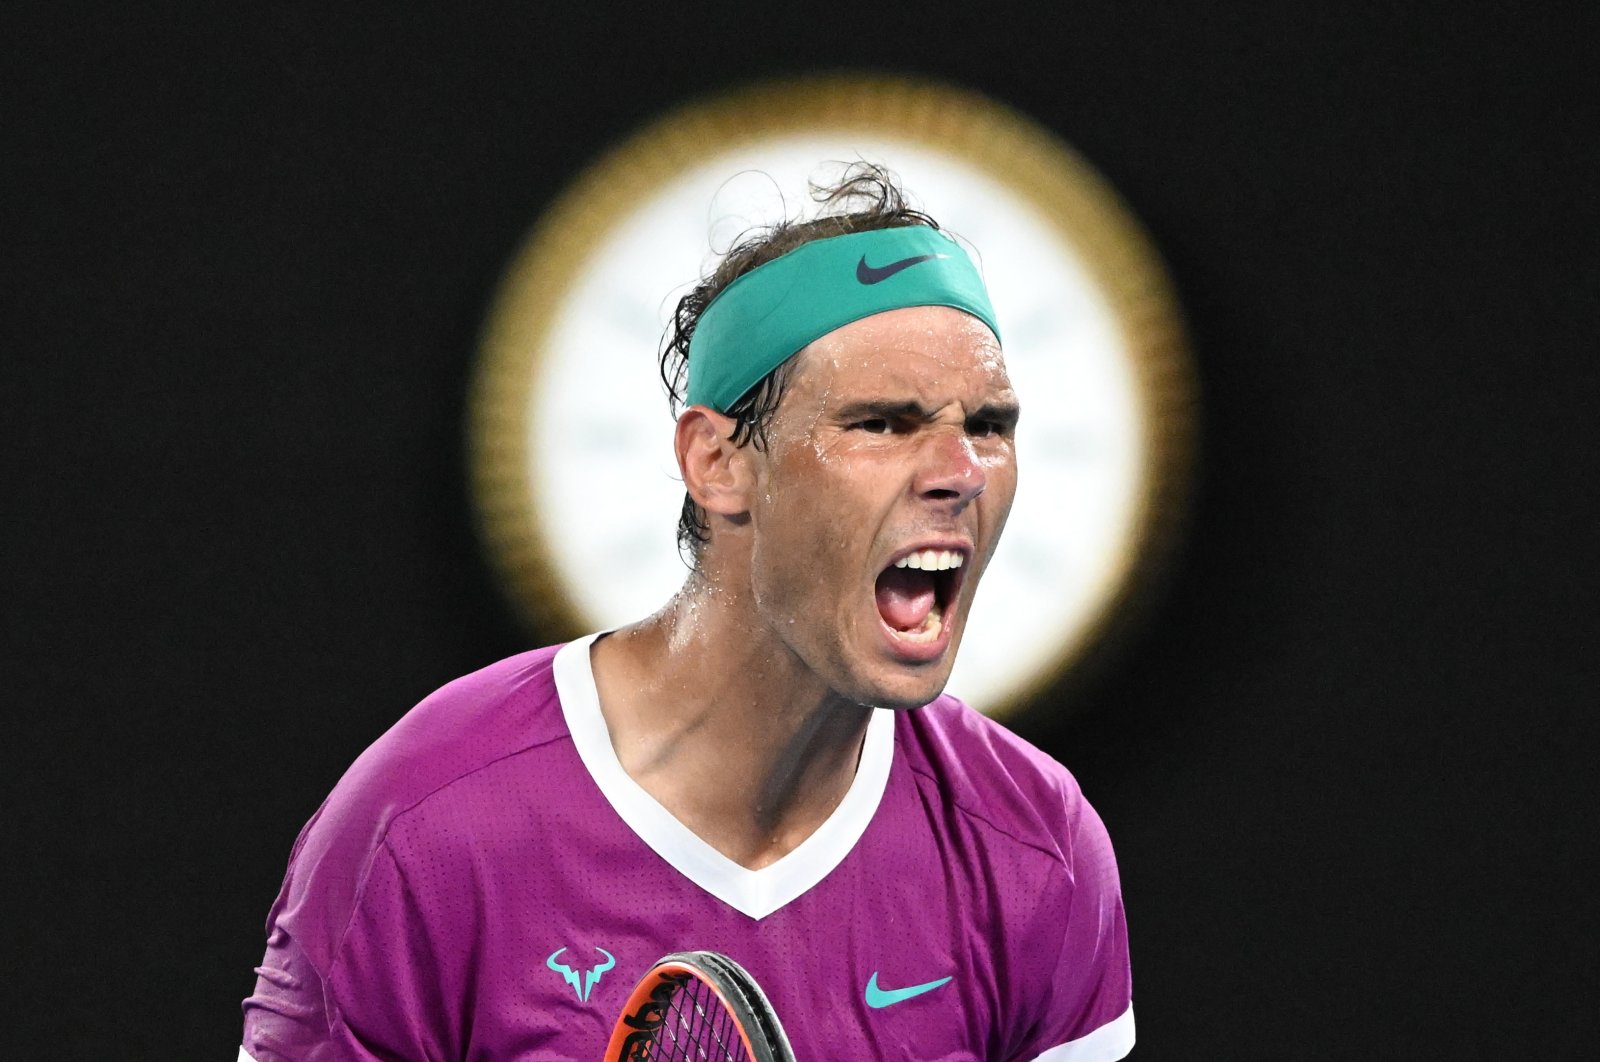 Spain&#039;s Rafael Nadal celebrates winning a game in the Australian Open final against Russia&#039;s Daniil Medvedev, Melbourne, Australia, Jan. 30, 2022. (EPA Photo)